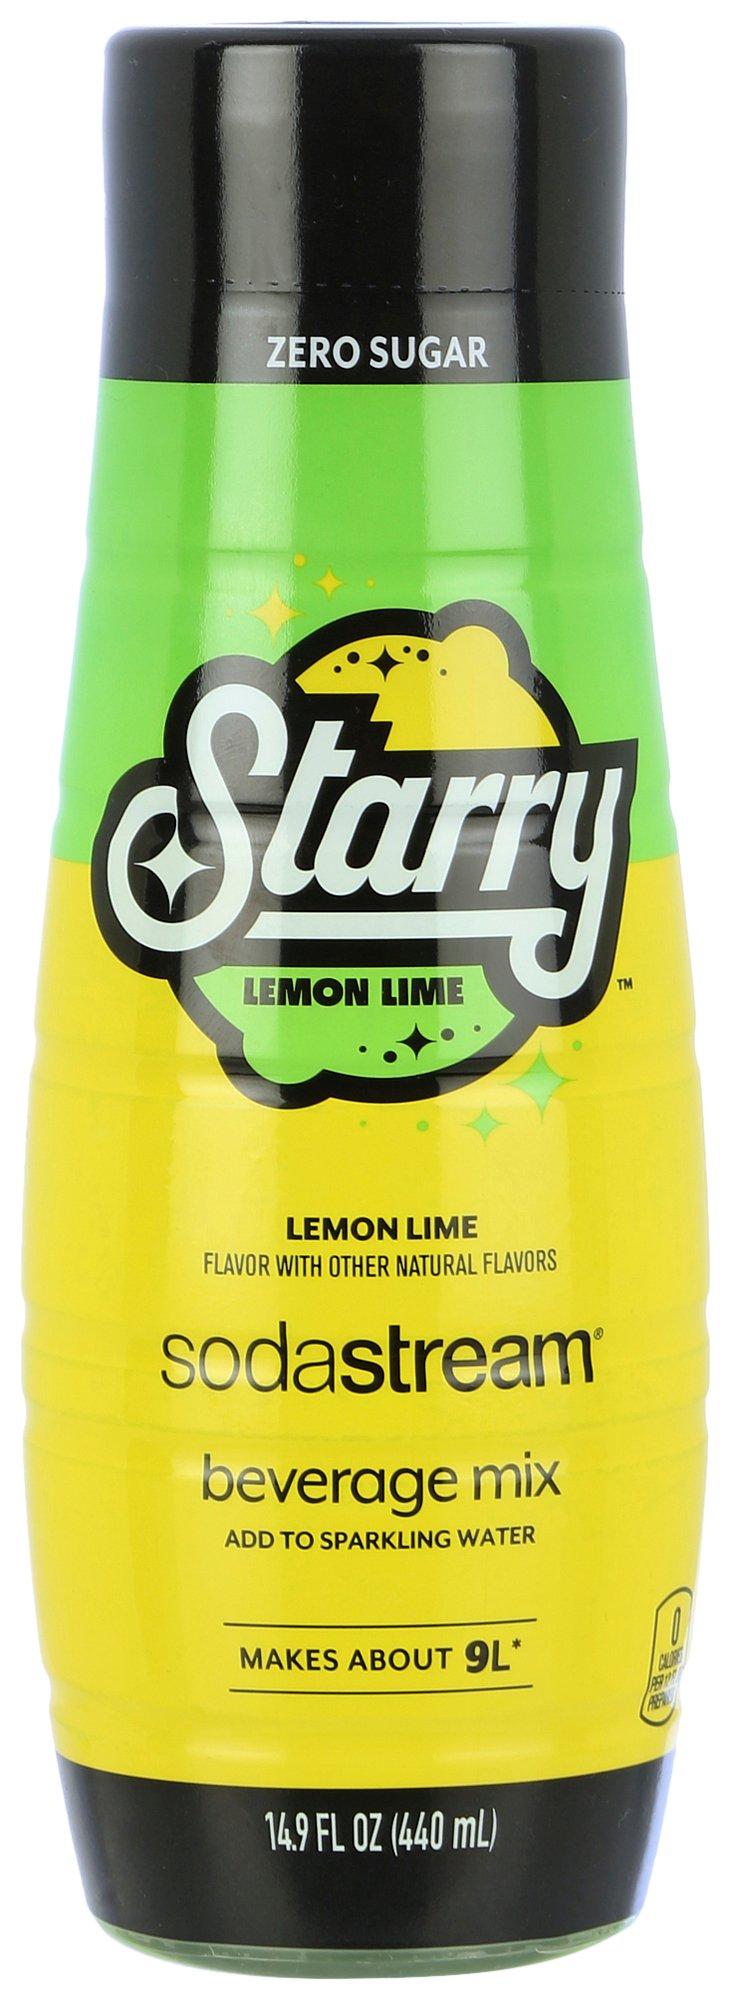 Sodastream Starry Lemon Lime Zero Sugar Mix